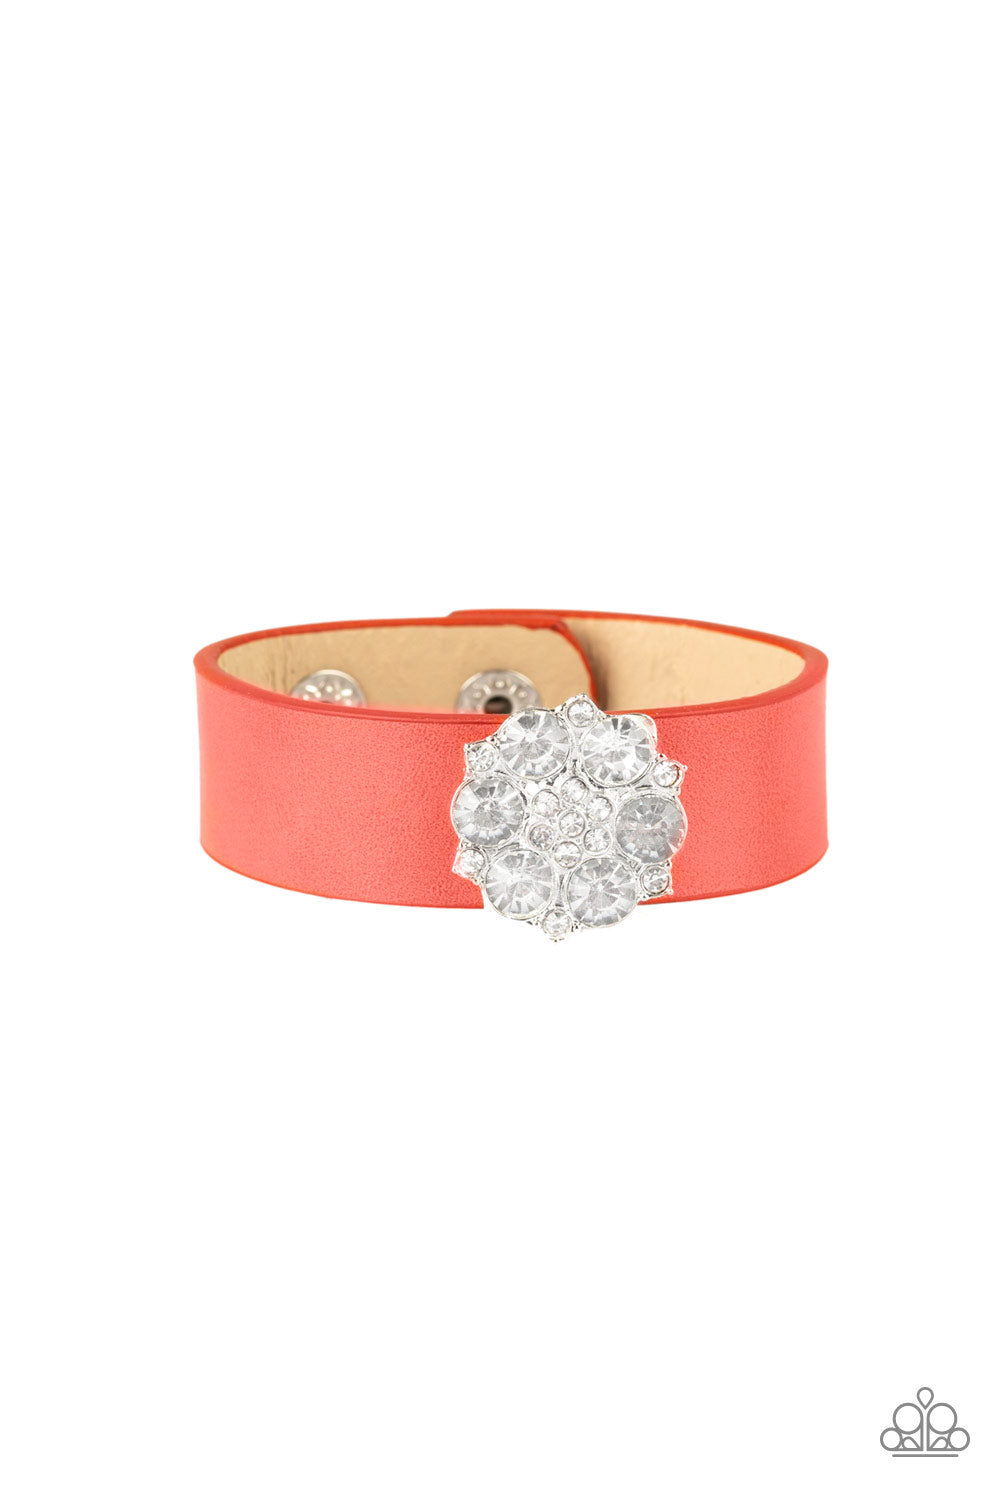 Show-Stopper Orange Paparazzi Bracelet Cashmere Pink Jewels - Cashmere Pink Jewels & Accessories, Cashmere Pink Jewels & Accessories - Paparazzi